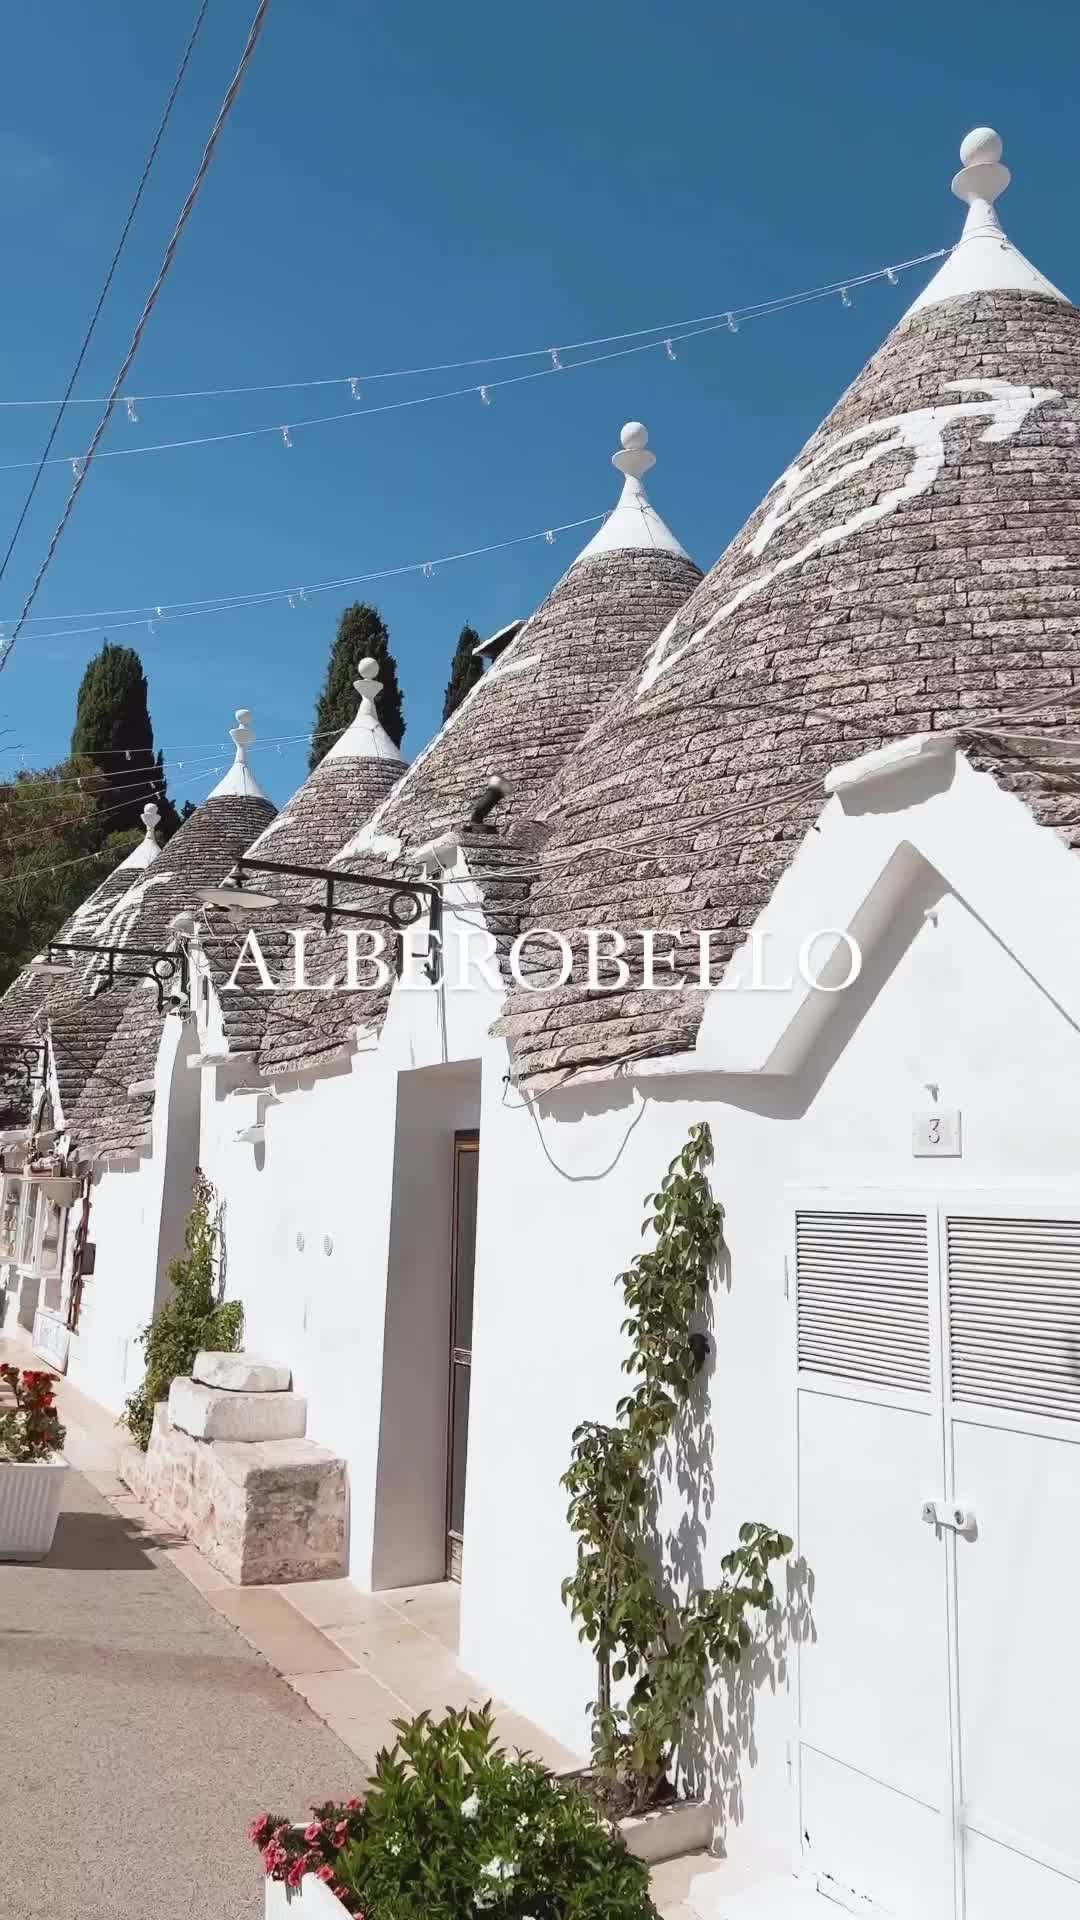 The stunning village of Alberobello in Puglia, Italy 🇮🇹 The houses here are so unique and pretty 😍 
.
.
.
.
#italianplaces #thatsdarling #italy #map_of_europe #italiainunoscatto #theprettycities #hello_worldpics #culturetrip #cntraveler #travellingthroughtheworld #italy_vacations #italygram #italylovers #passionpassport #alberobello #pugliagram #apuliatravels #tlpicks #beautifuldestinations #apulia #italytravel #beautifulmatters #theweekoninstagram #iamatraveler #italia #puglialovers #pugliamia #pugliaview #pugliadavedere Visit Italy, Italia, Italy, Visit Apulia, Visit Puglia